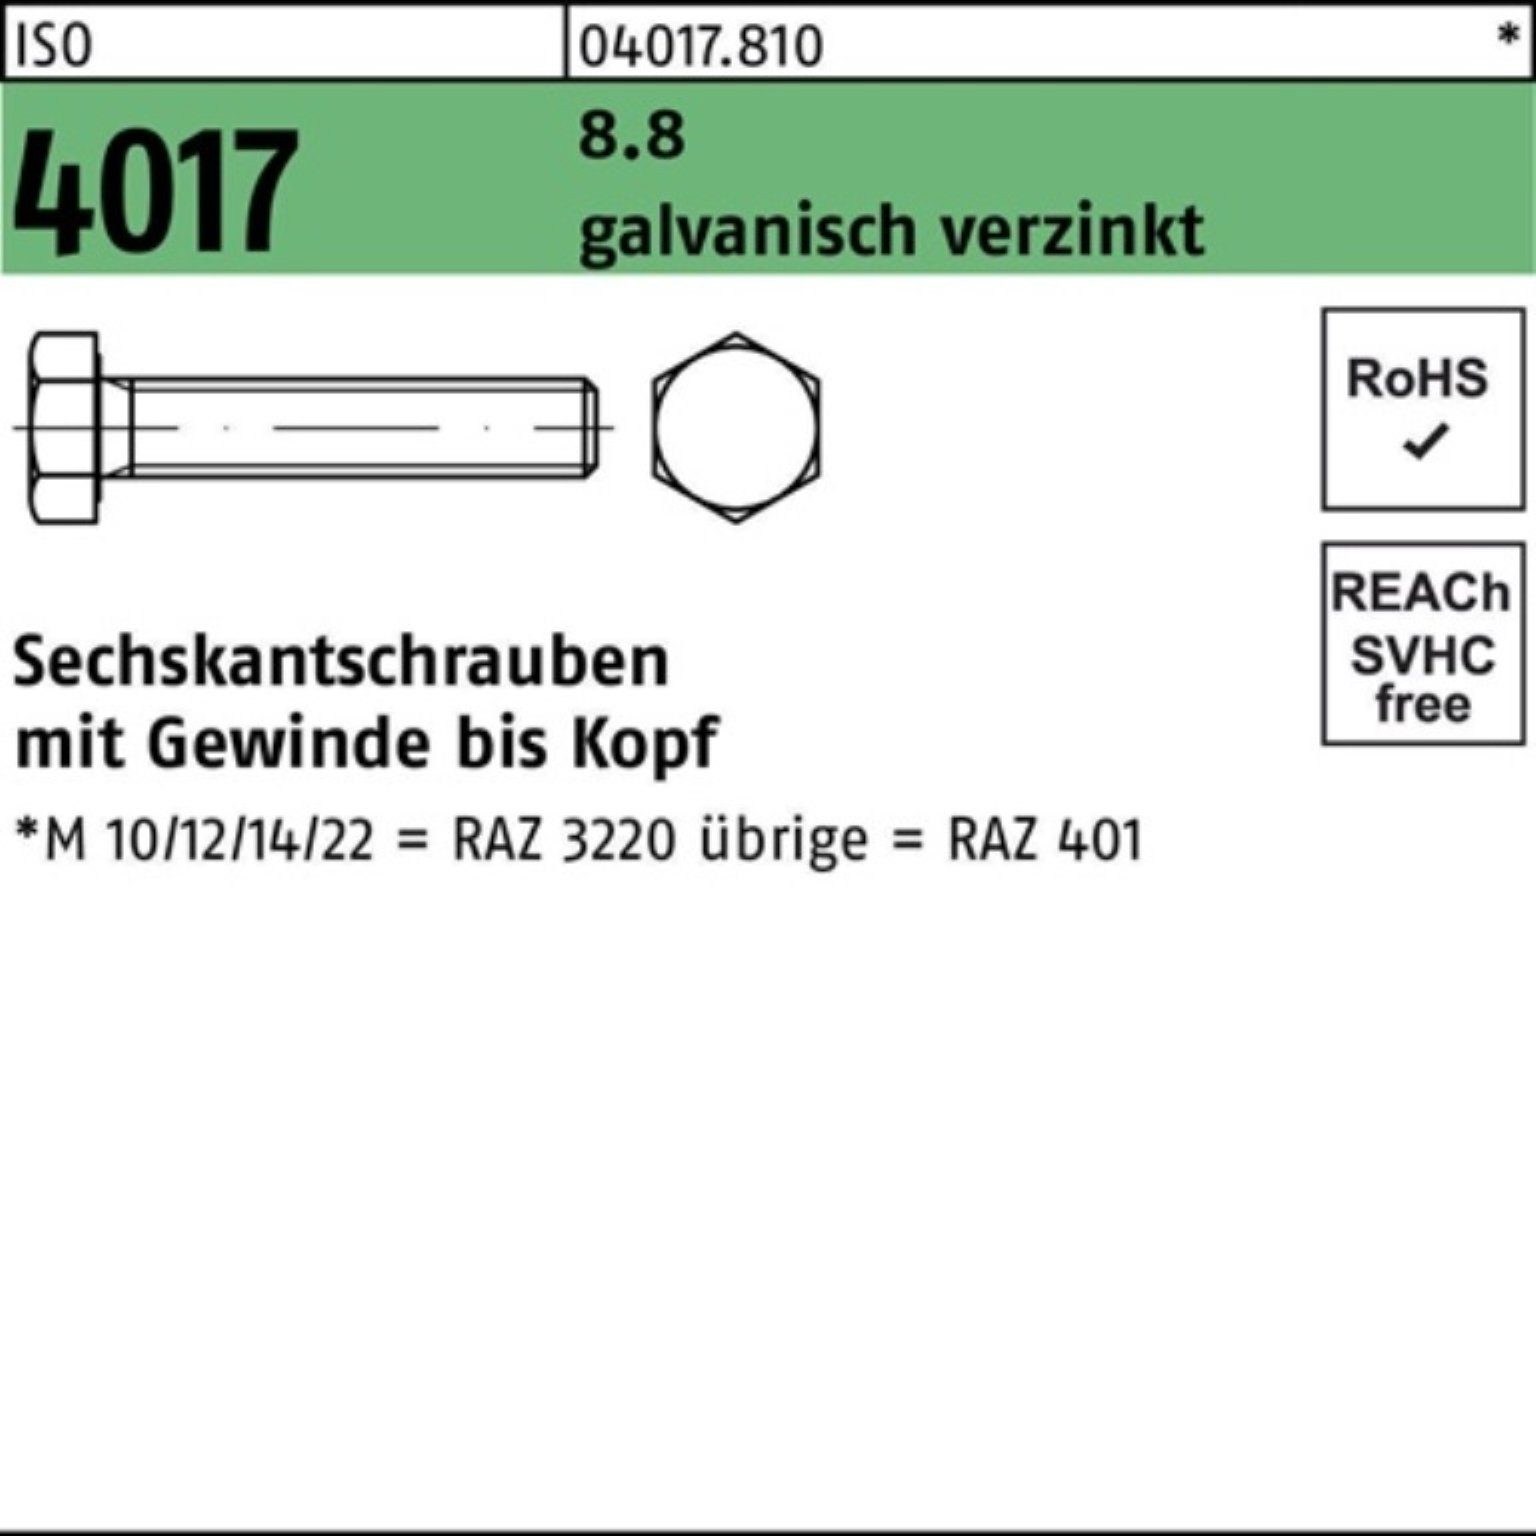 Bufab Sechskantschraube 100er Pack Sechskantschraube ISO 4017 VG M27x 100 8.8 galv.verz. 1 St